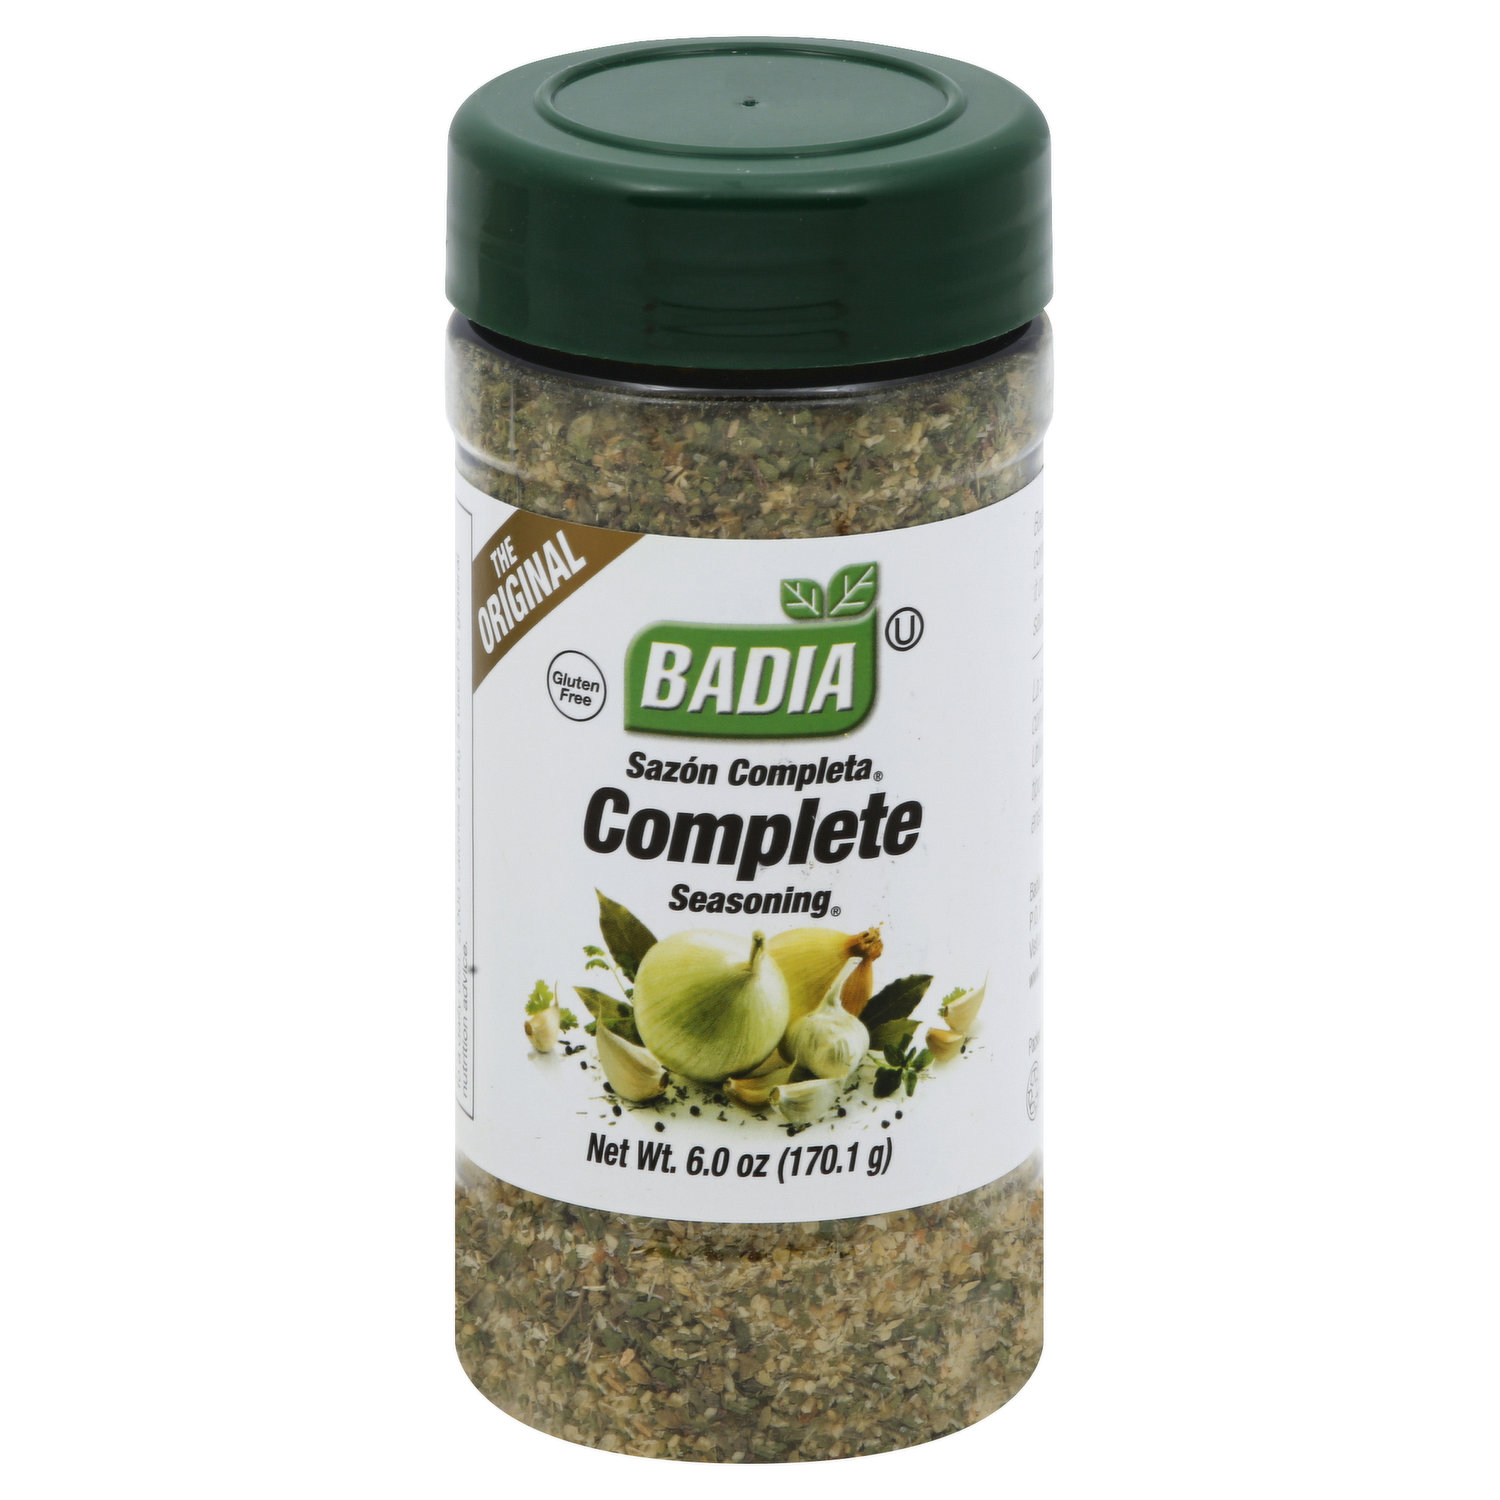 Save on Badia Complete Seasoning Order Online Delivery